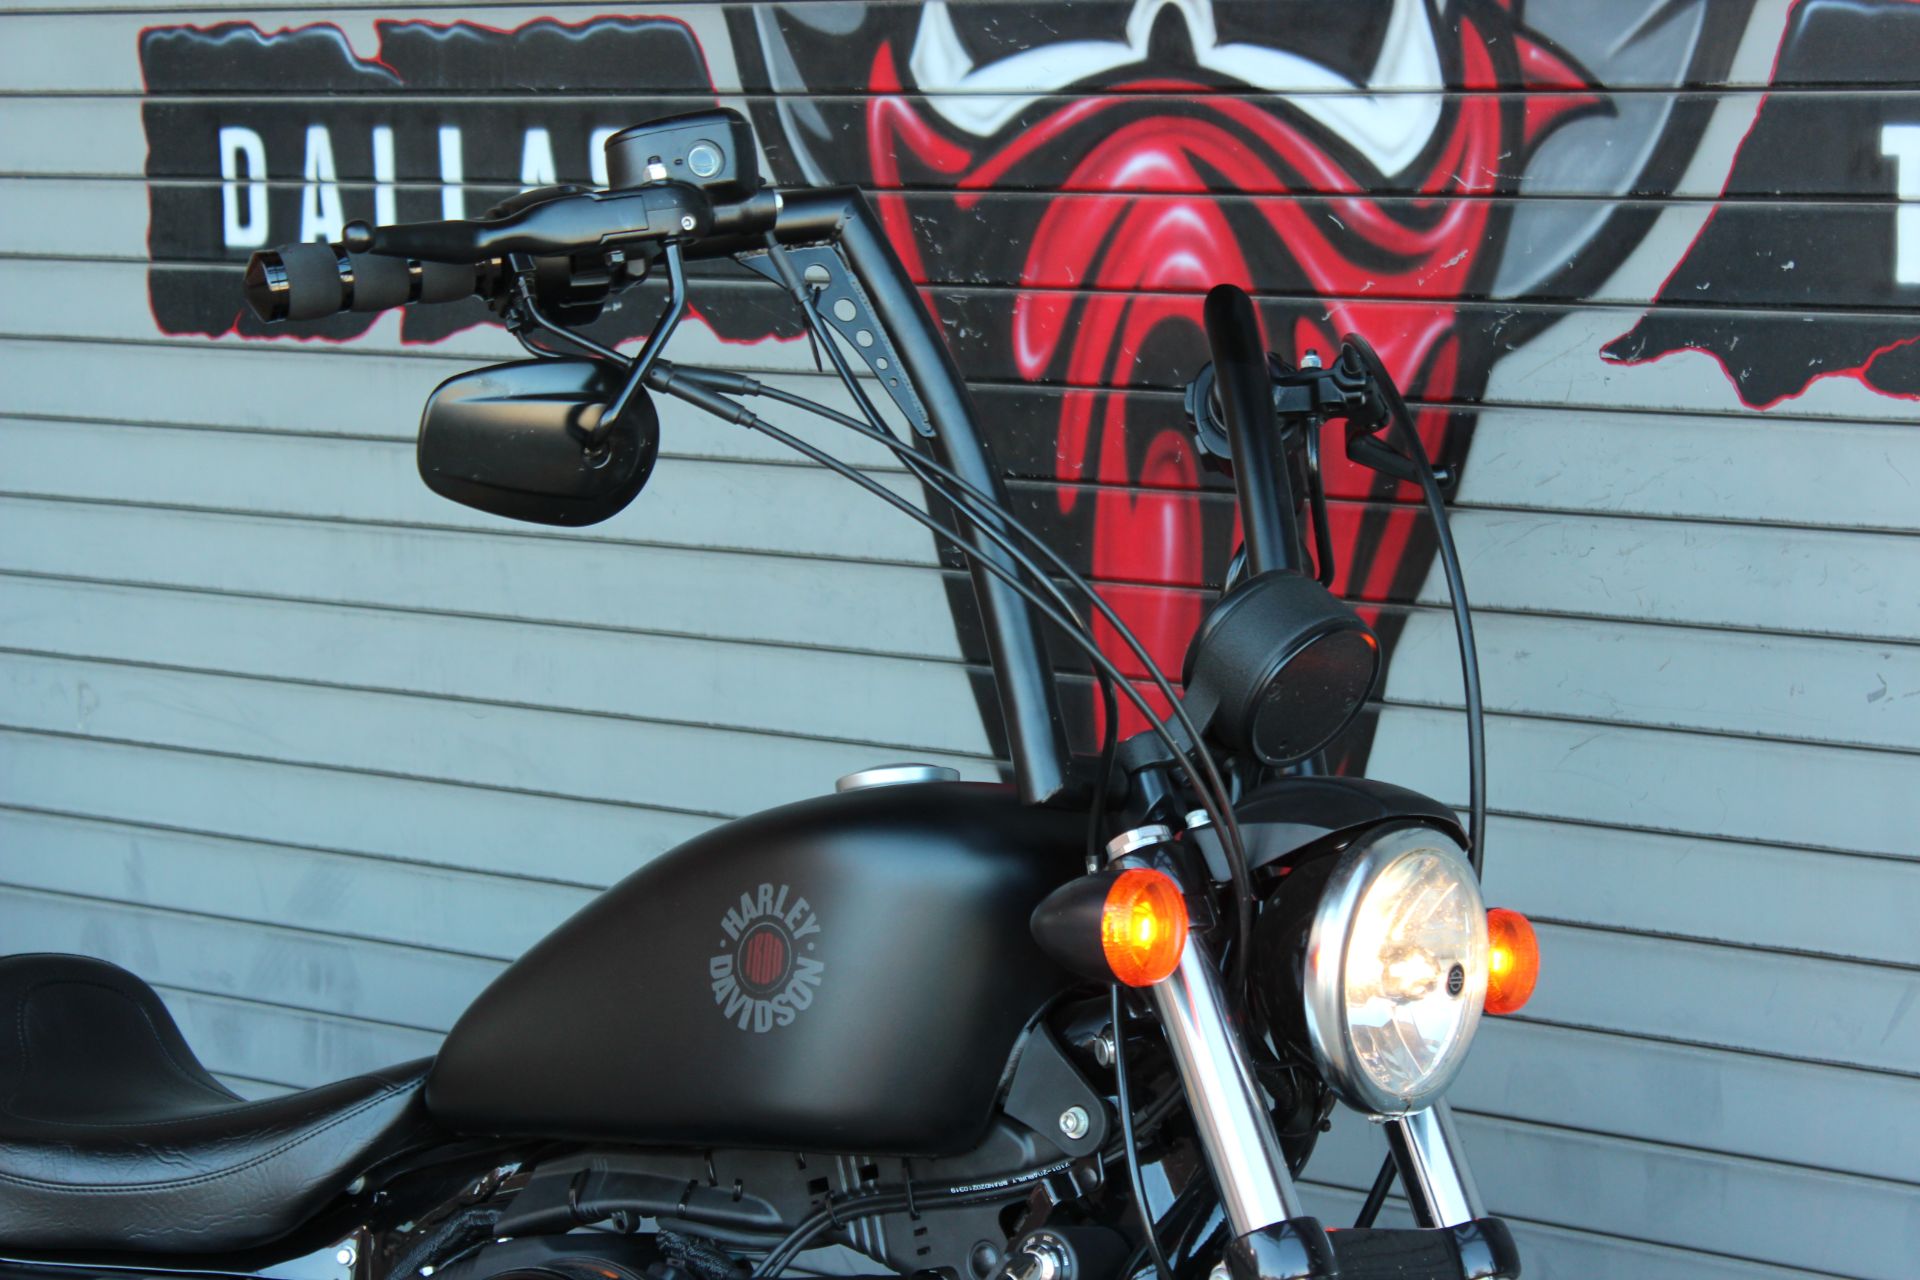 2021 Harley-Davidson Iron 883™ in Carrollton, Texas - Photo 2